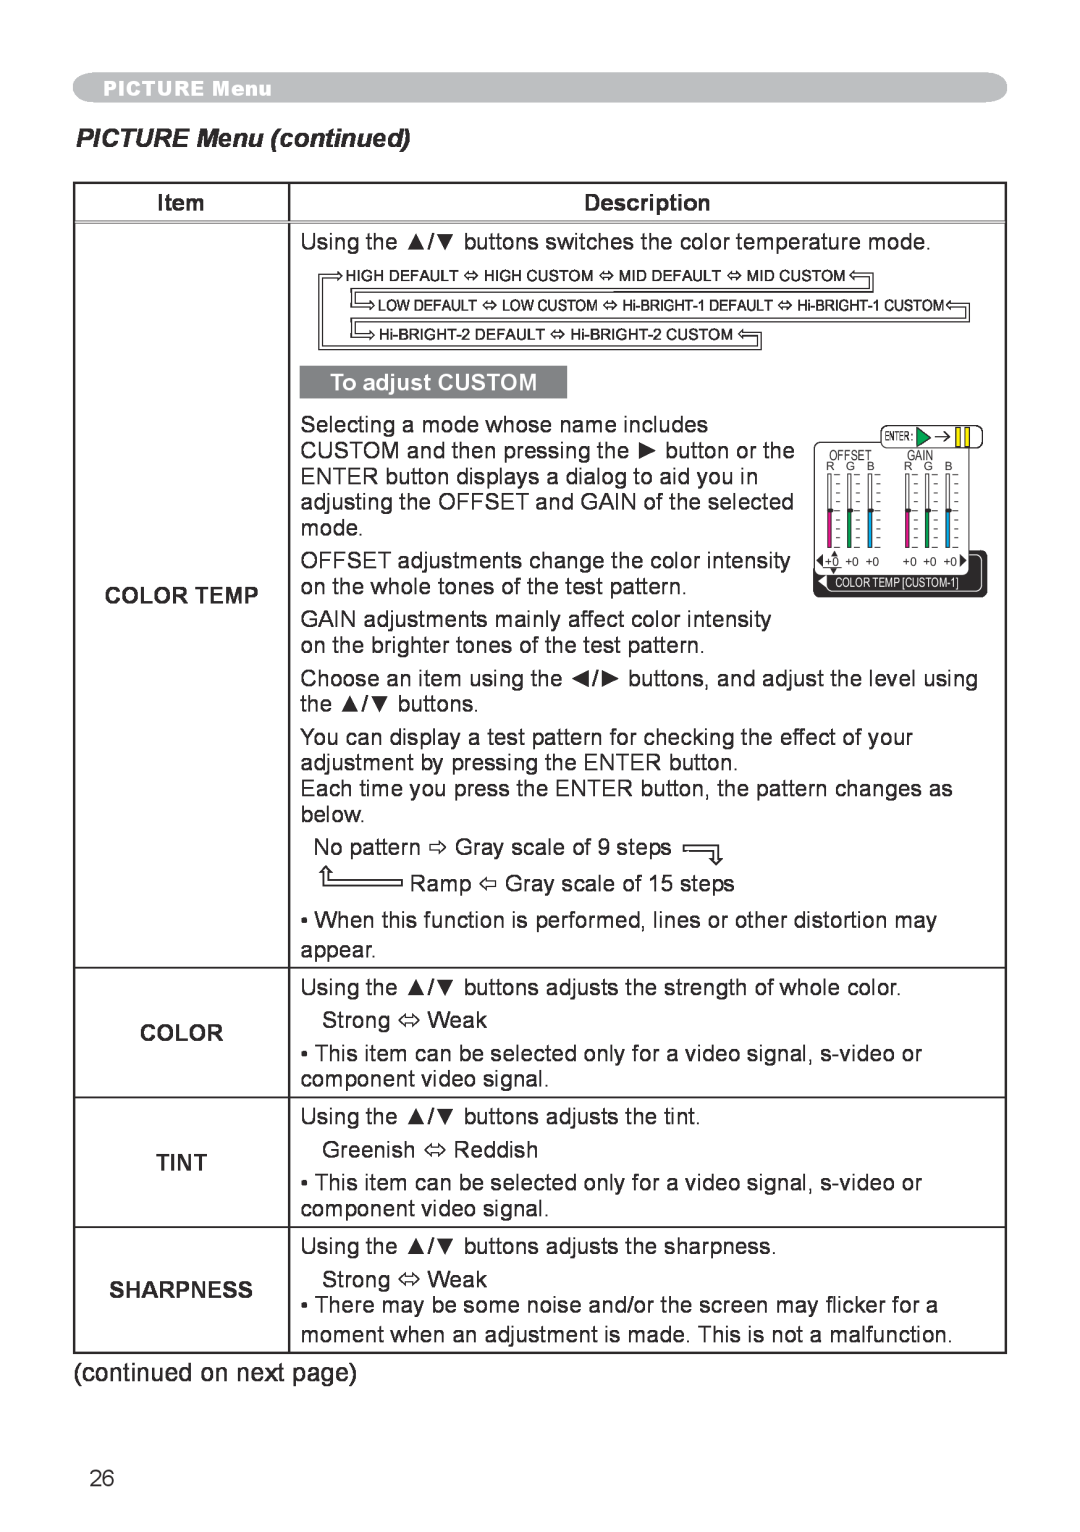 Hitachi CP-X600 user manual PICTURE Menu continued, Description, To adjust CUSTOM, Color Temp, Tint, Sharpness 